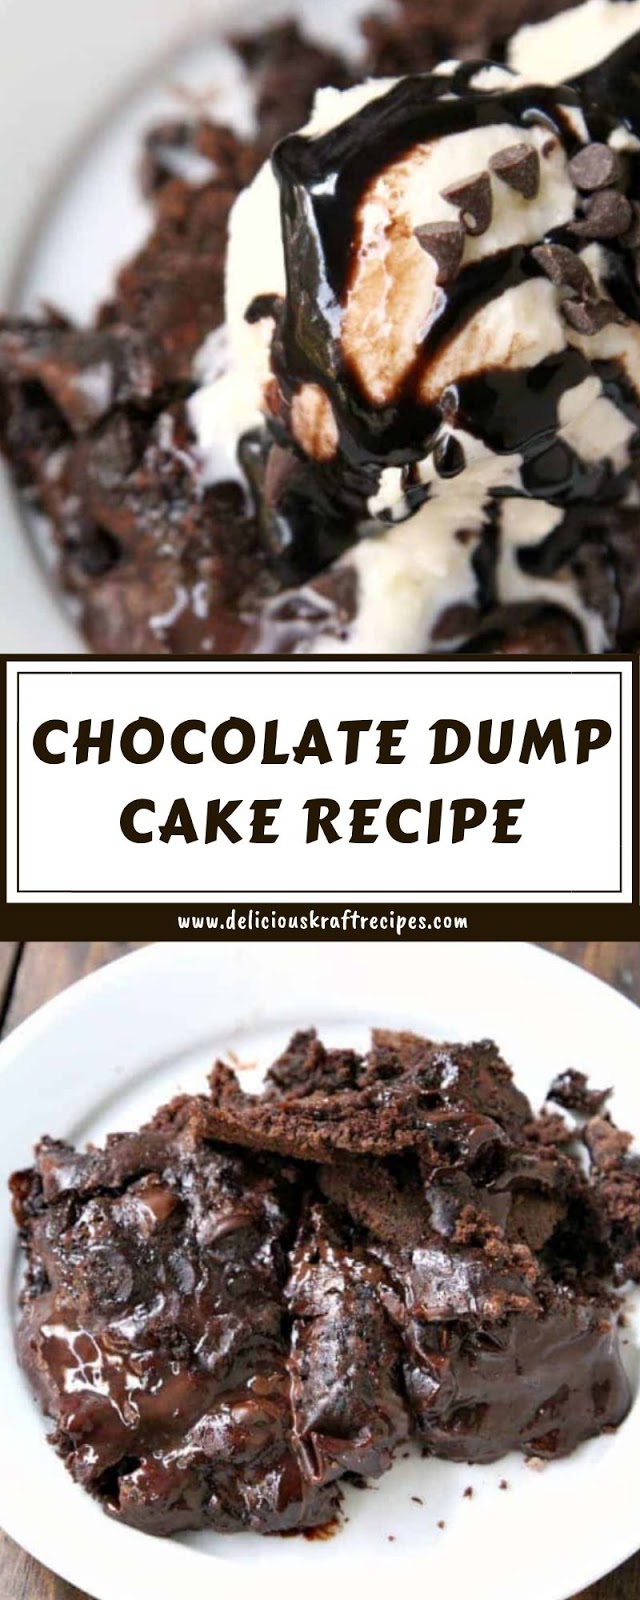 CHOCOLATE DUMP CAKE RECIPE